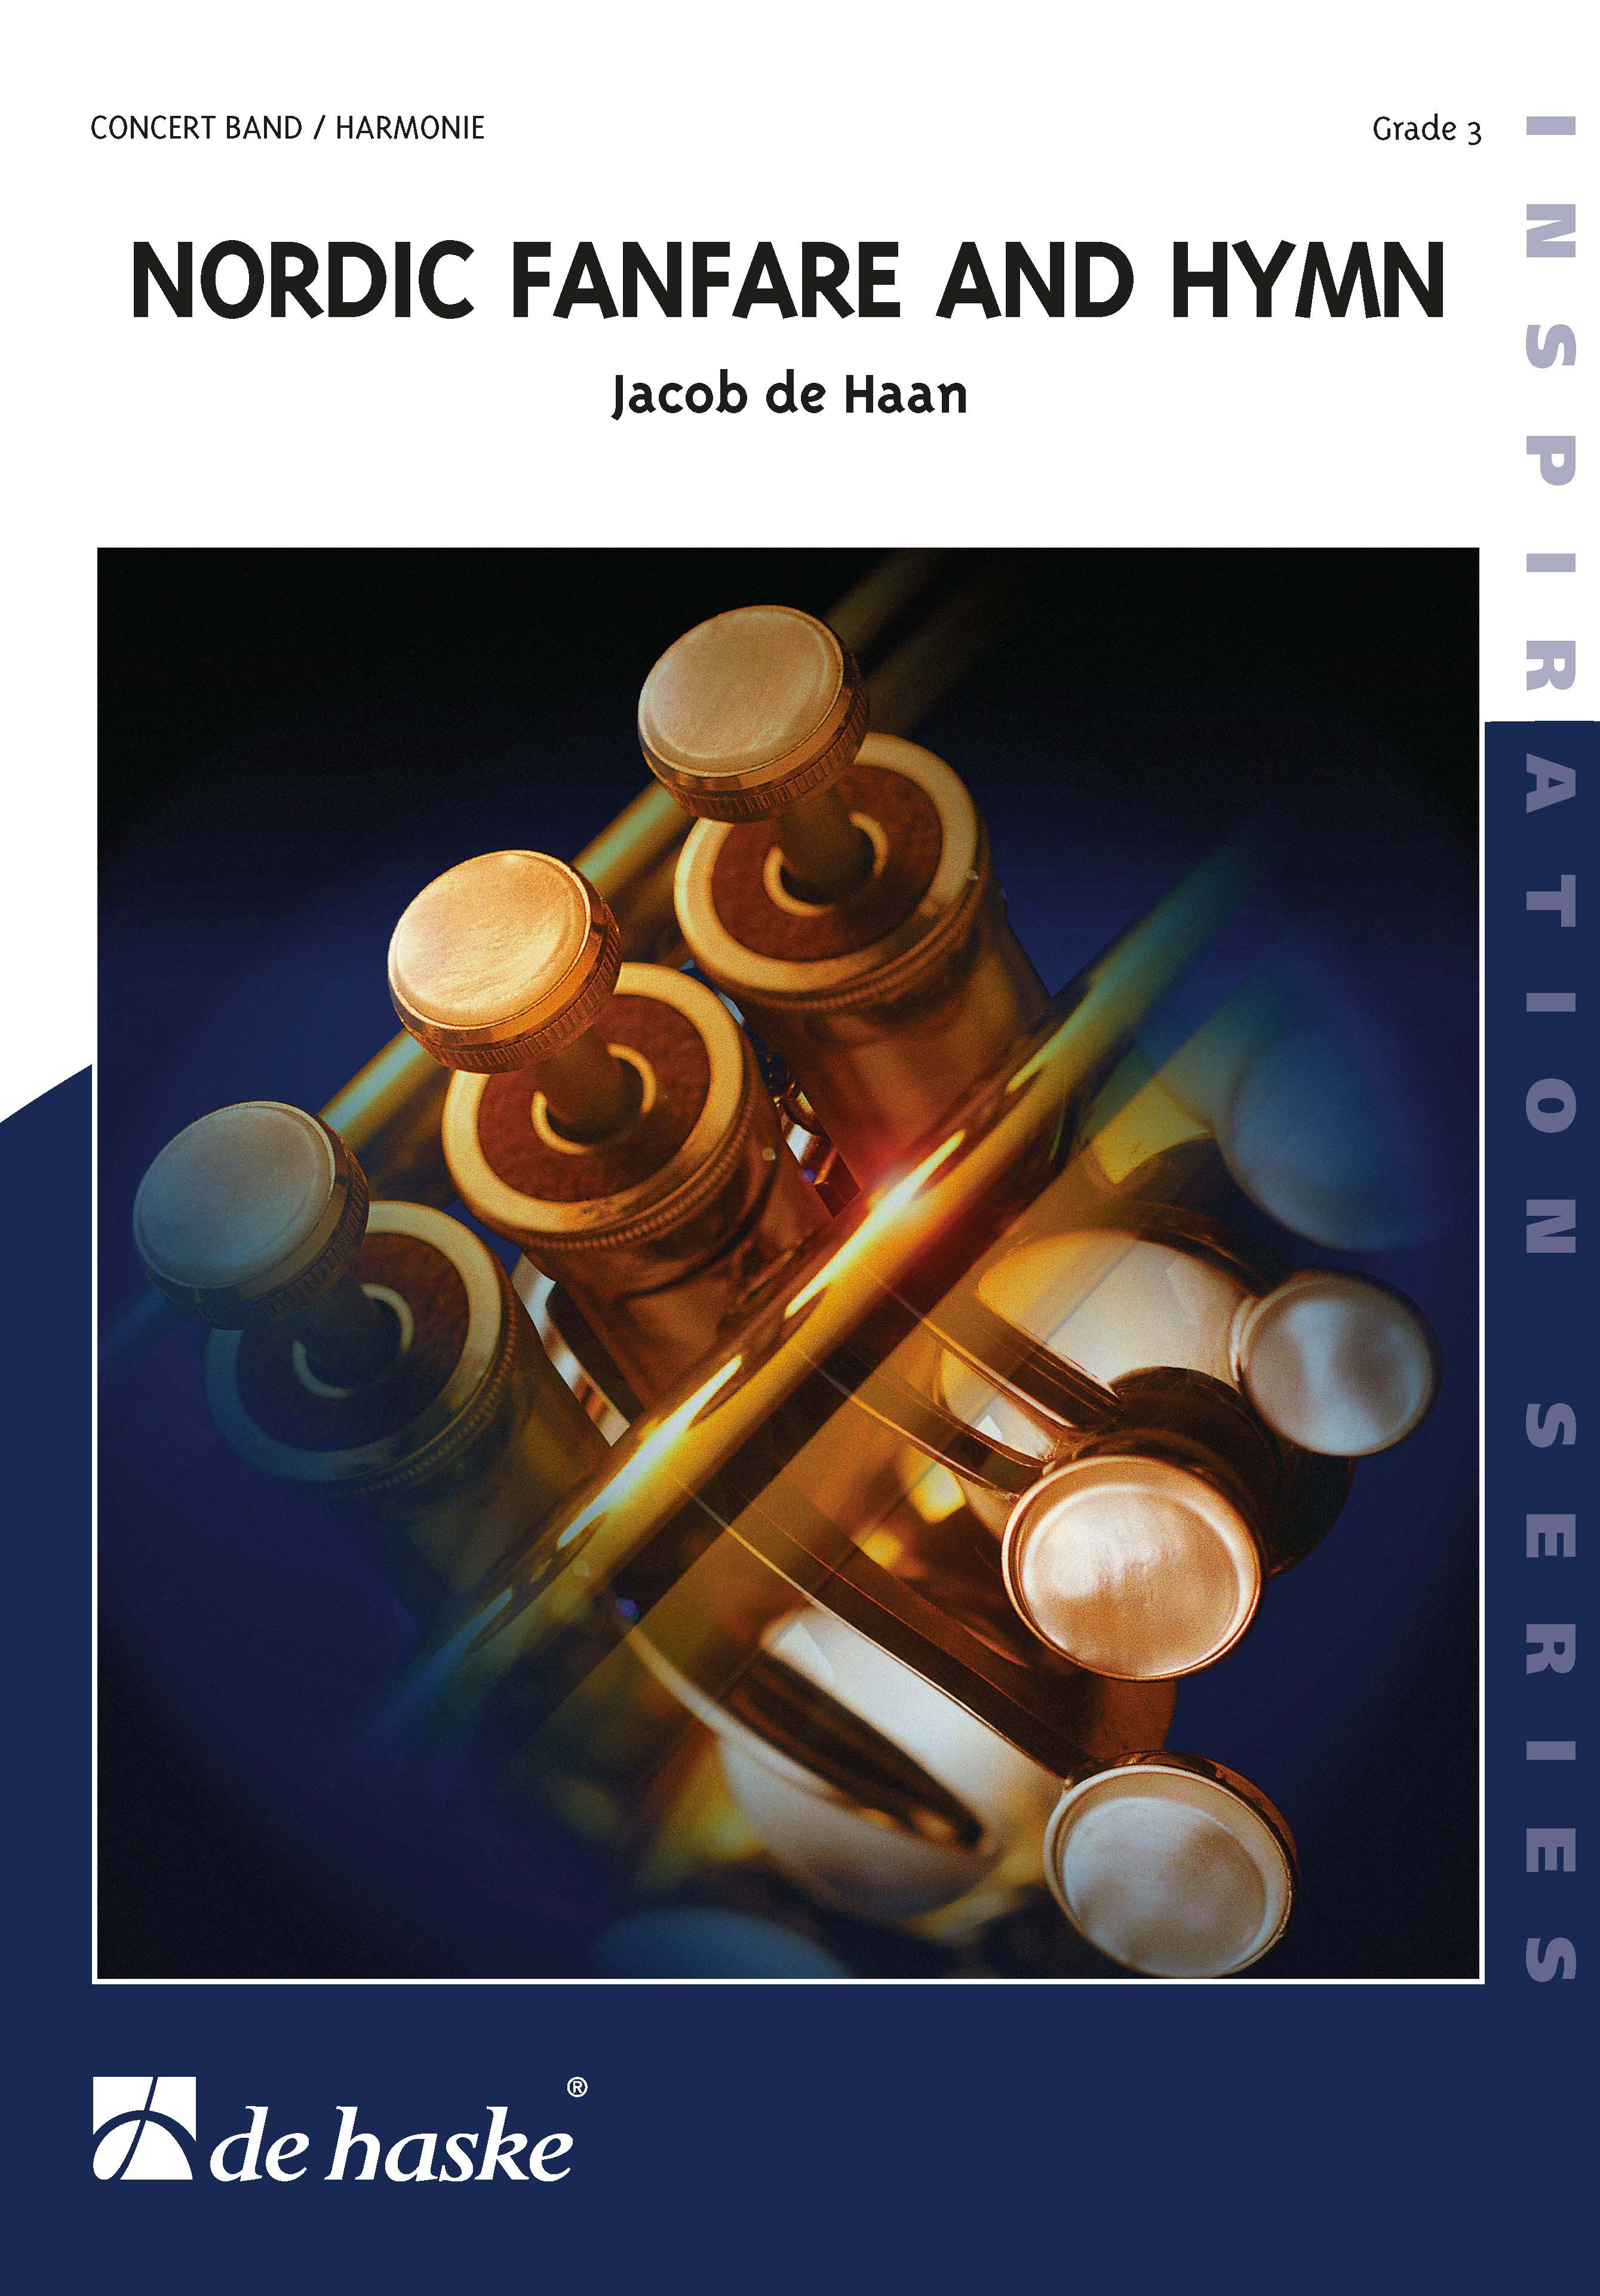 Jacob de Haan: Nordic Fanfare and Hymn: Concert Band: Score & Parts